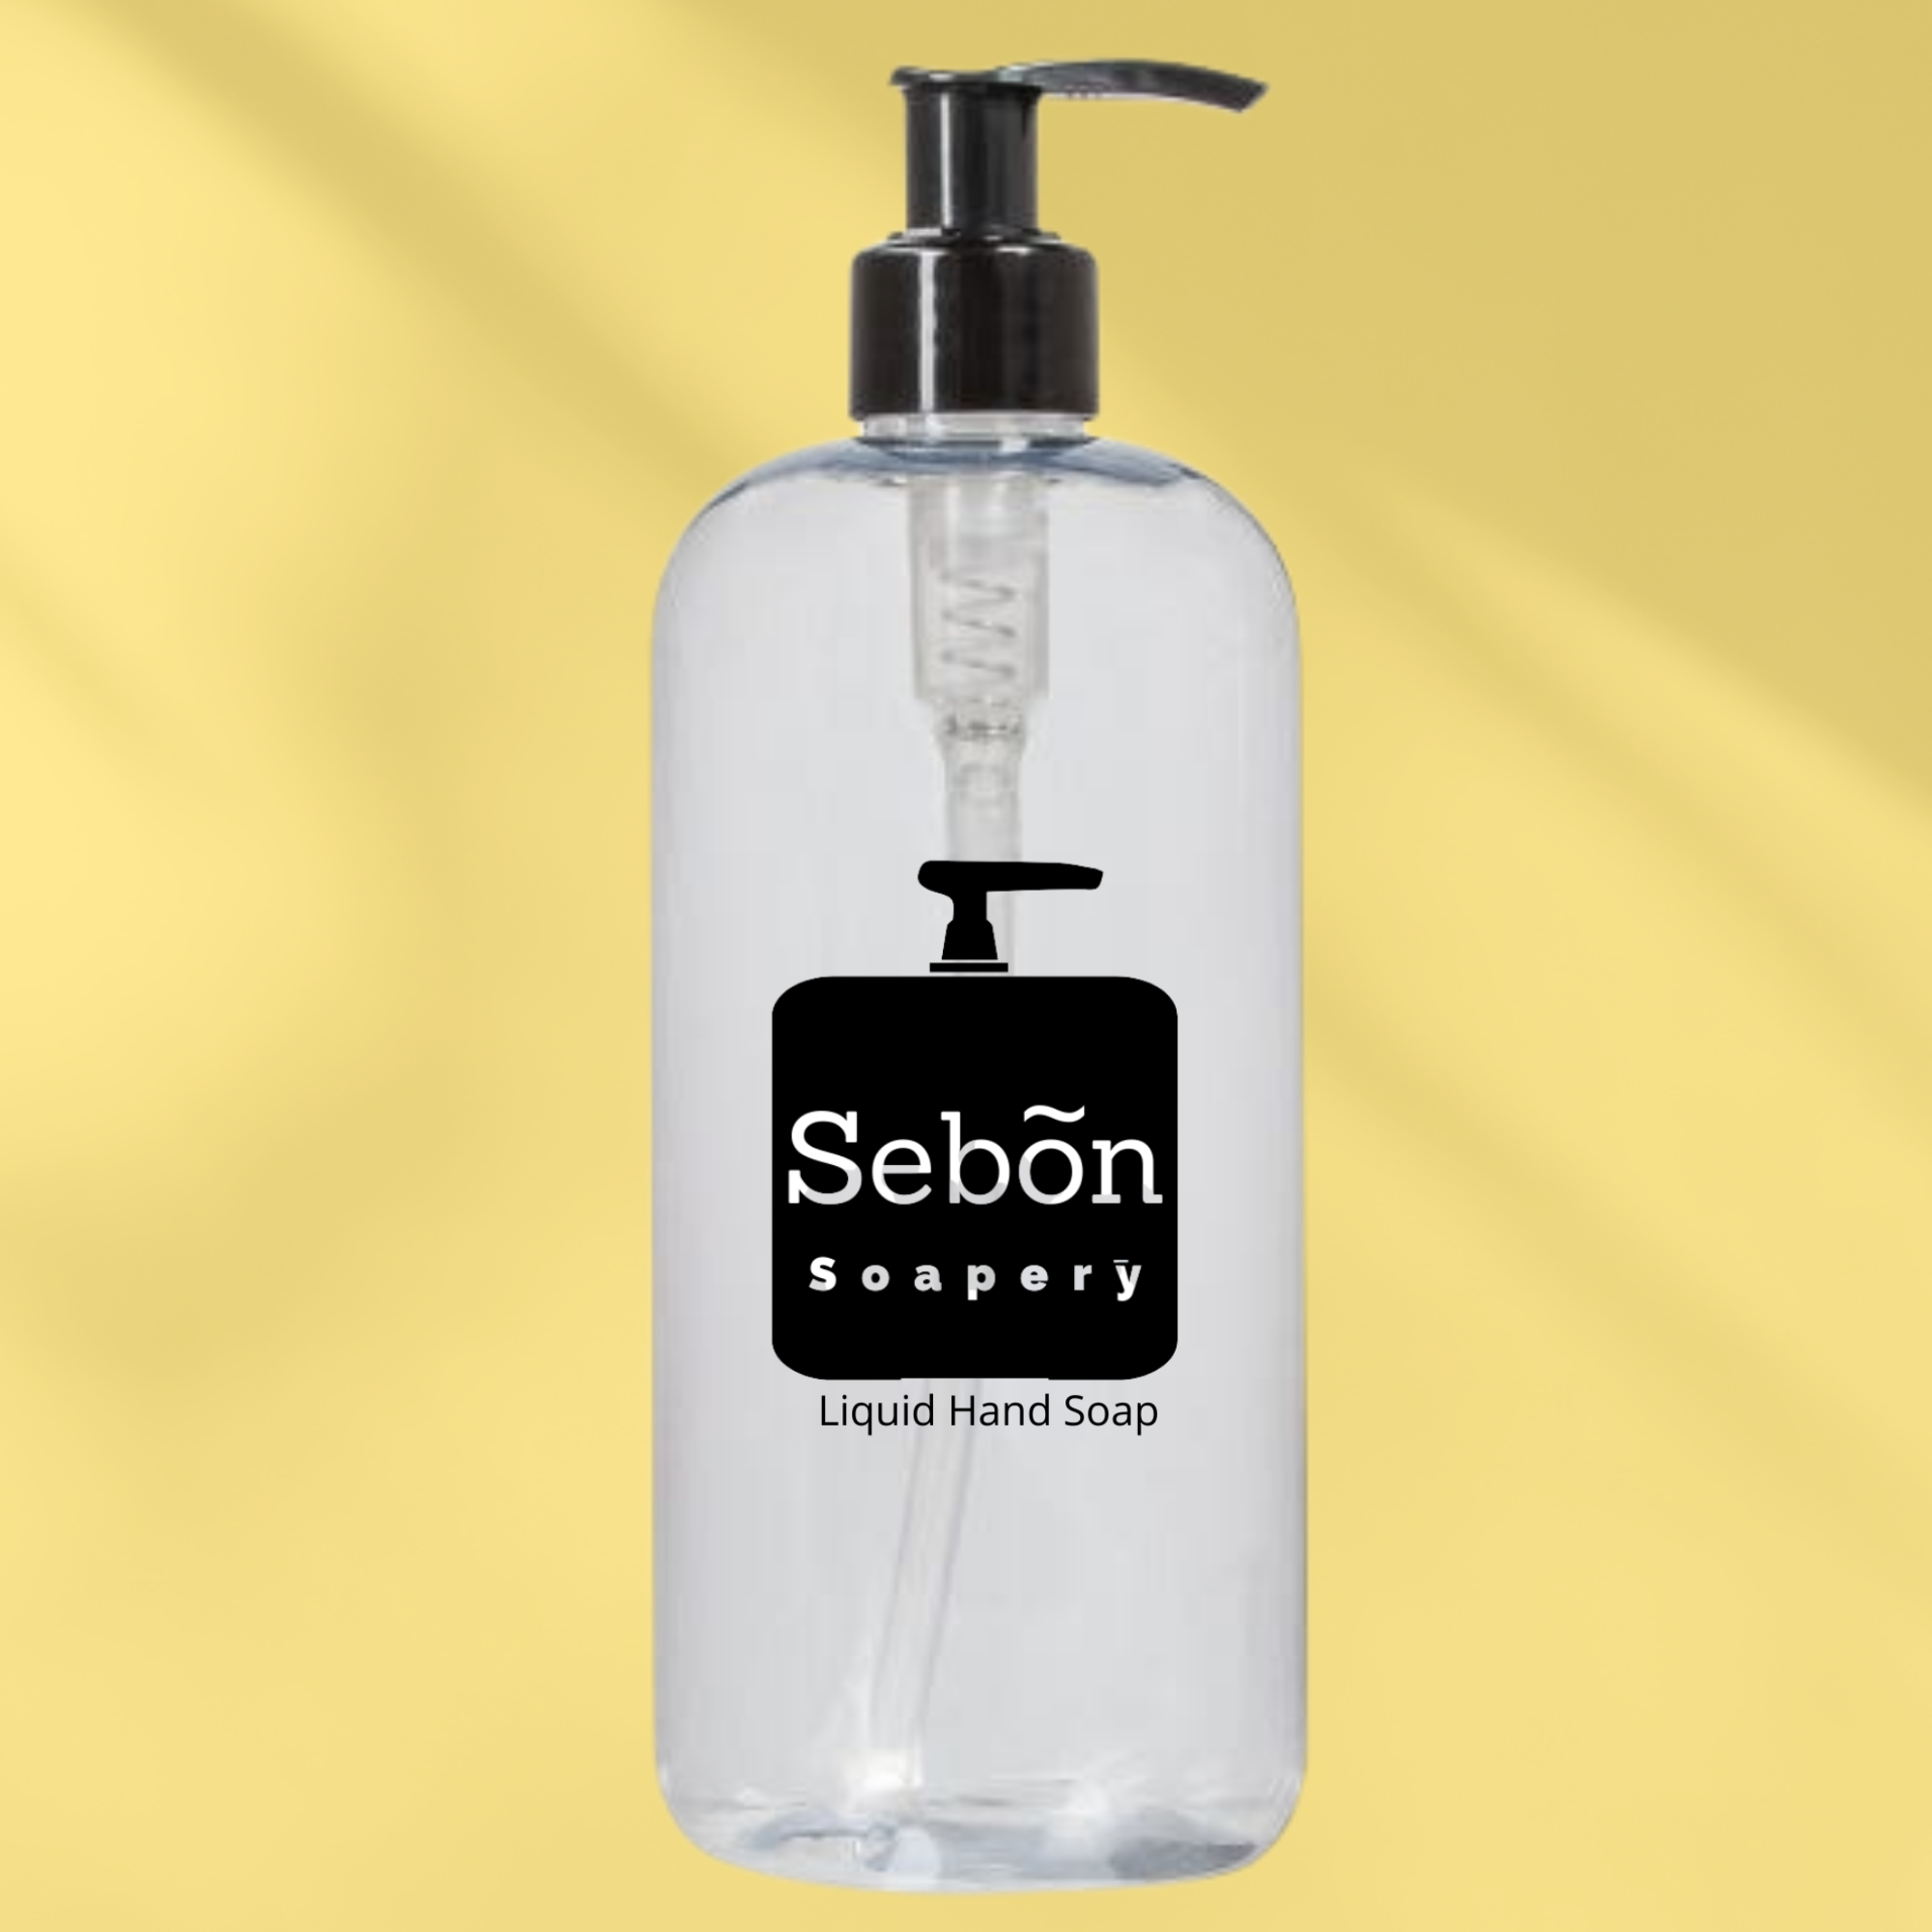 Sebon Blood Orange & Vanilla Scented Liquid Hand Soap with Olive Oil